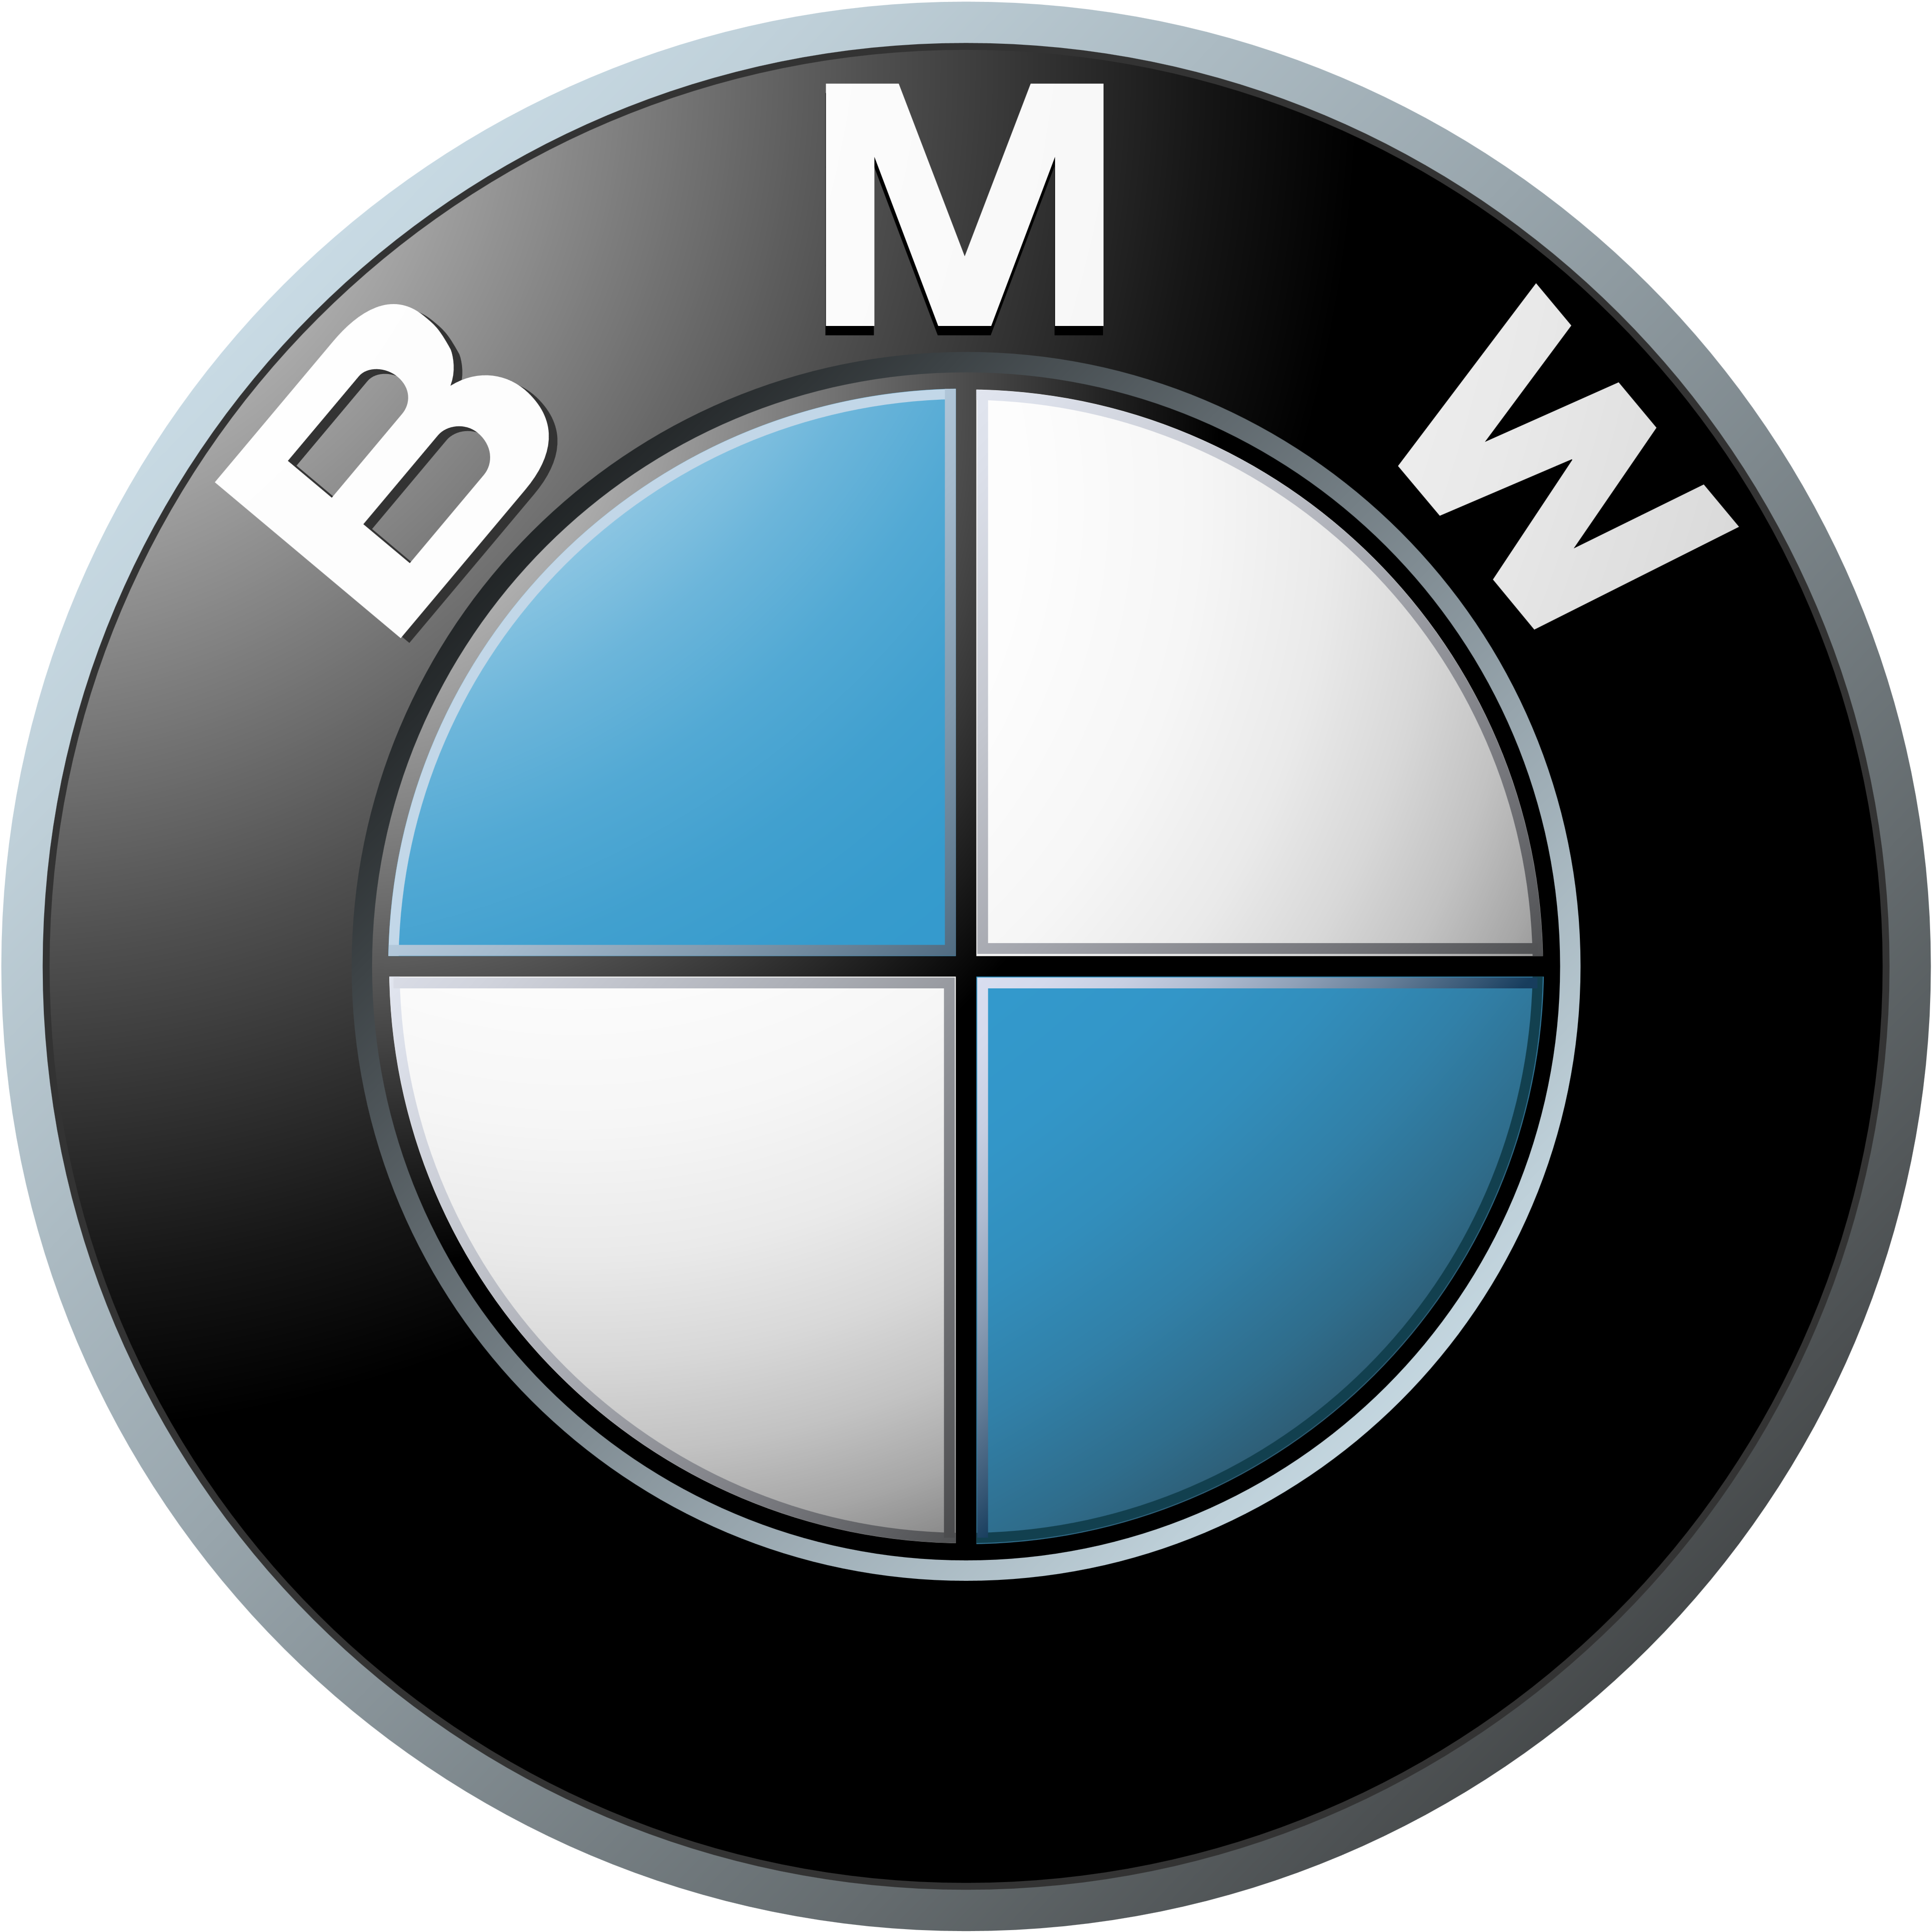 bmw logo photoshop download